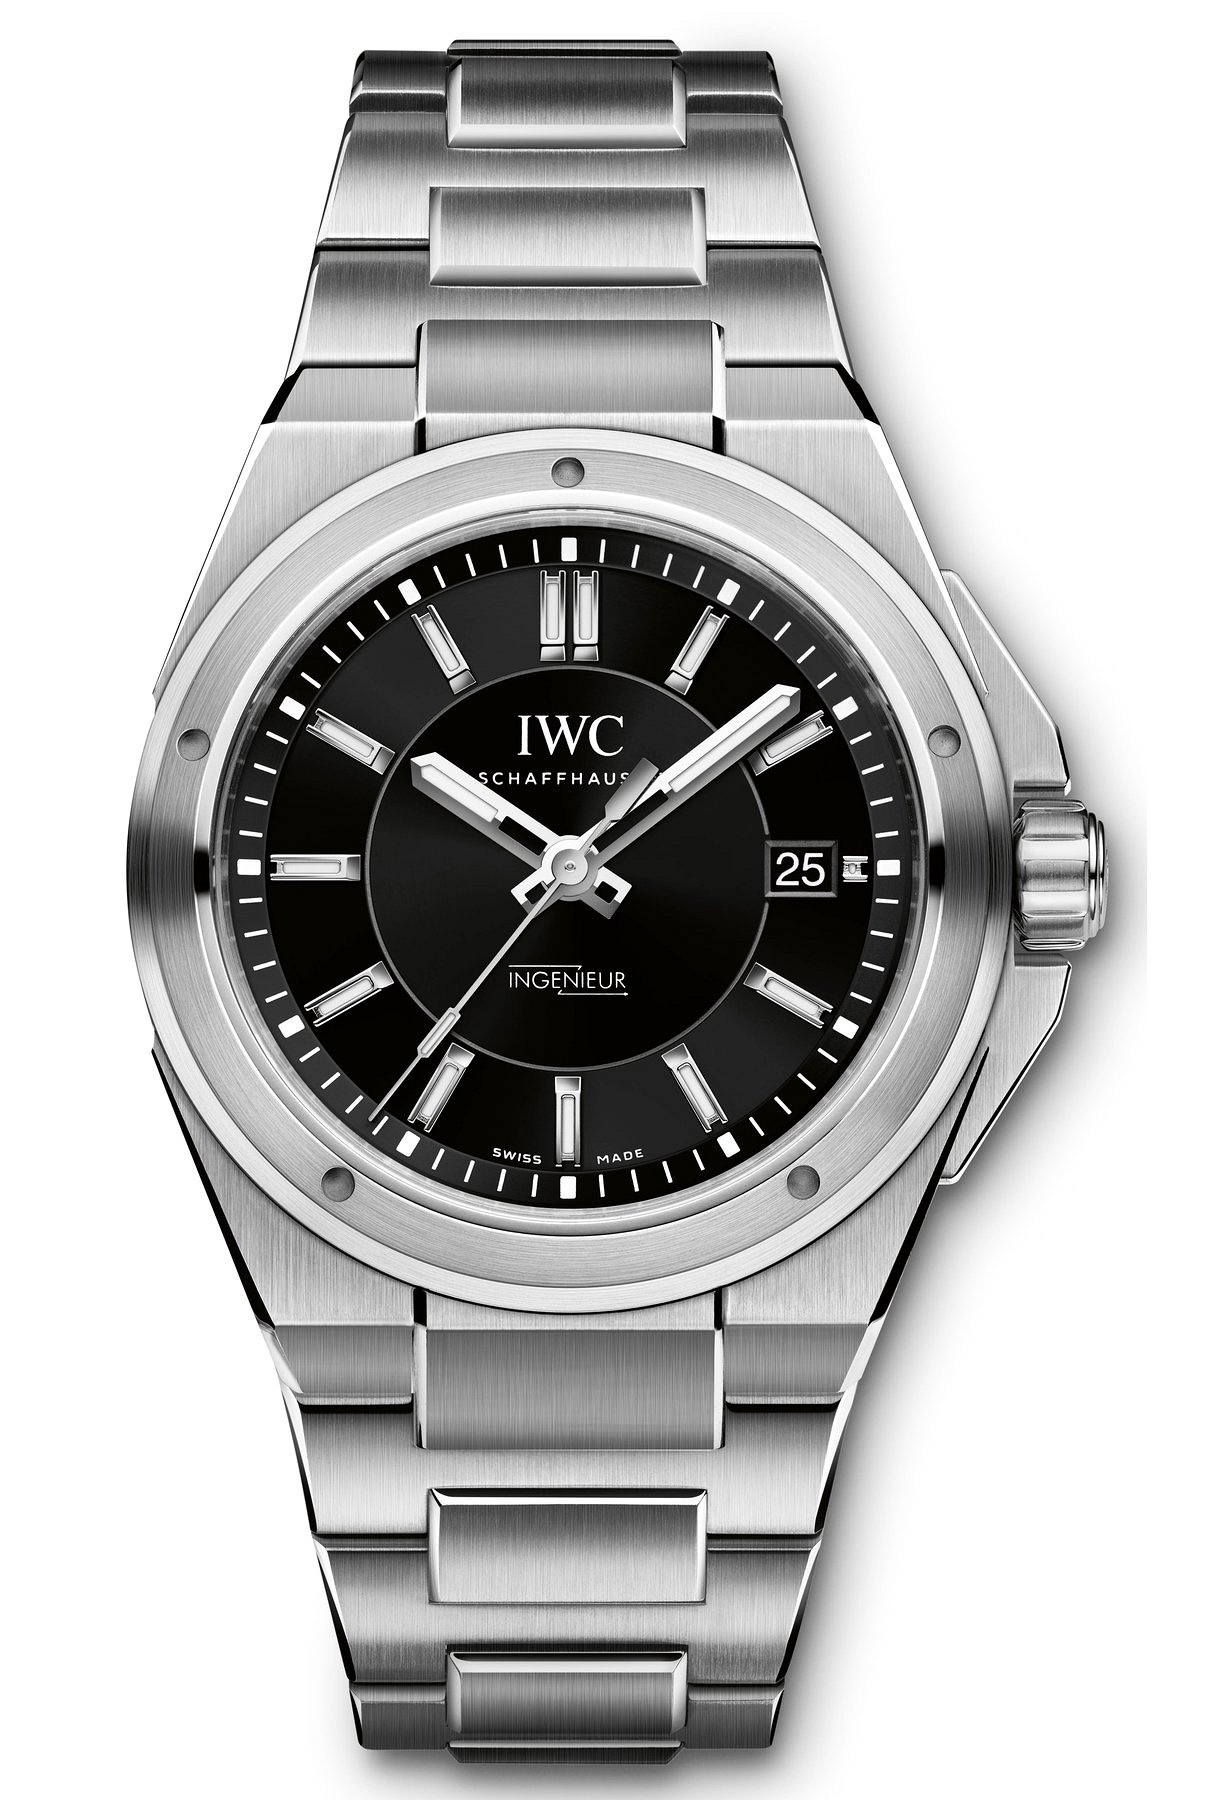 IWC Ingenieur IW3239-02